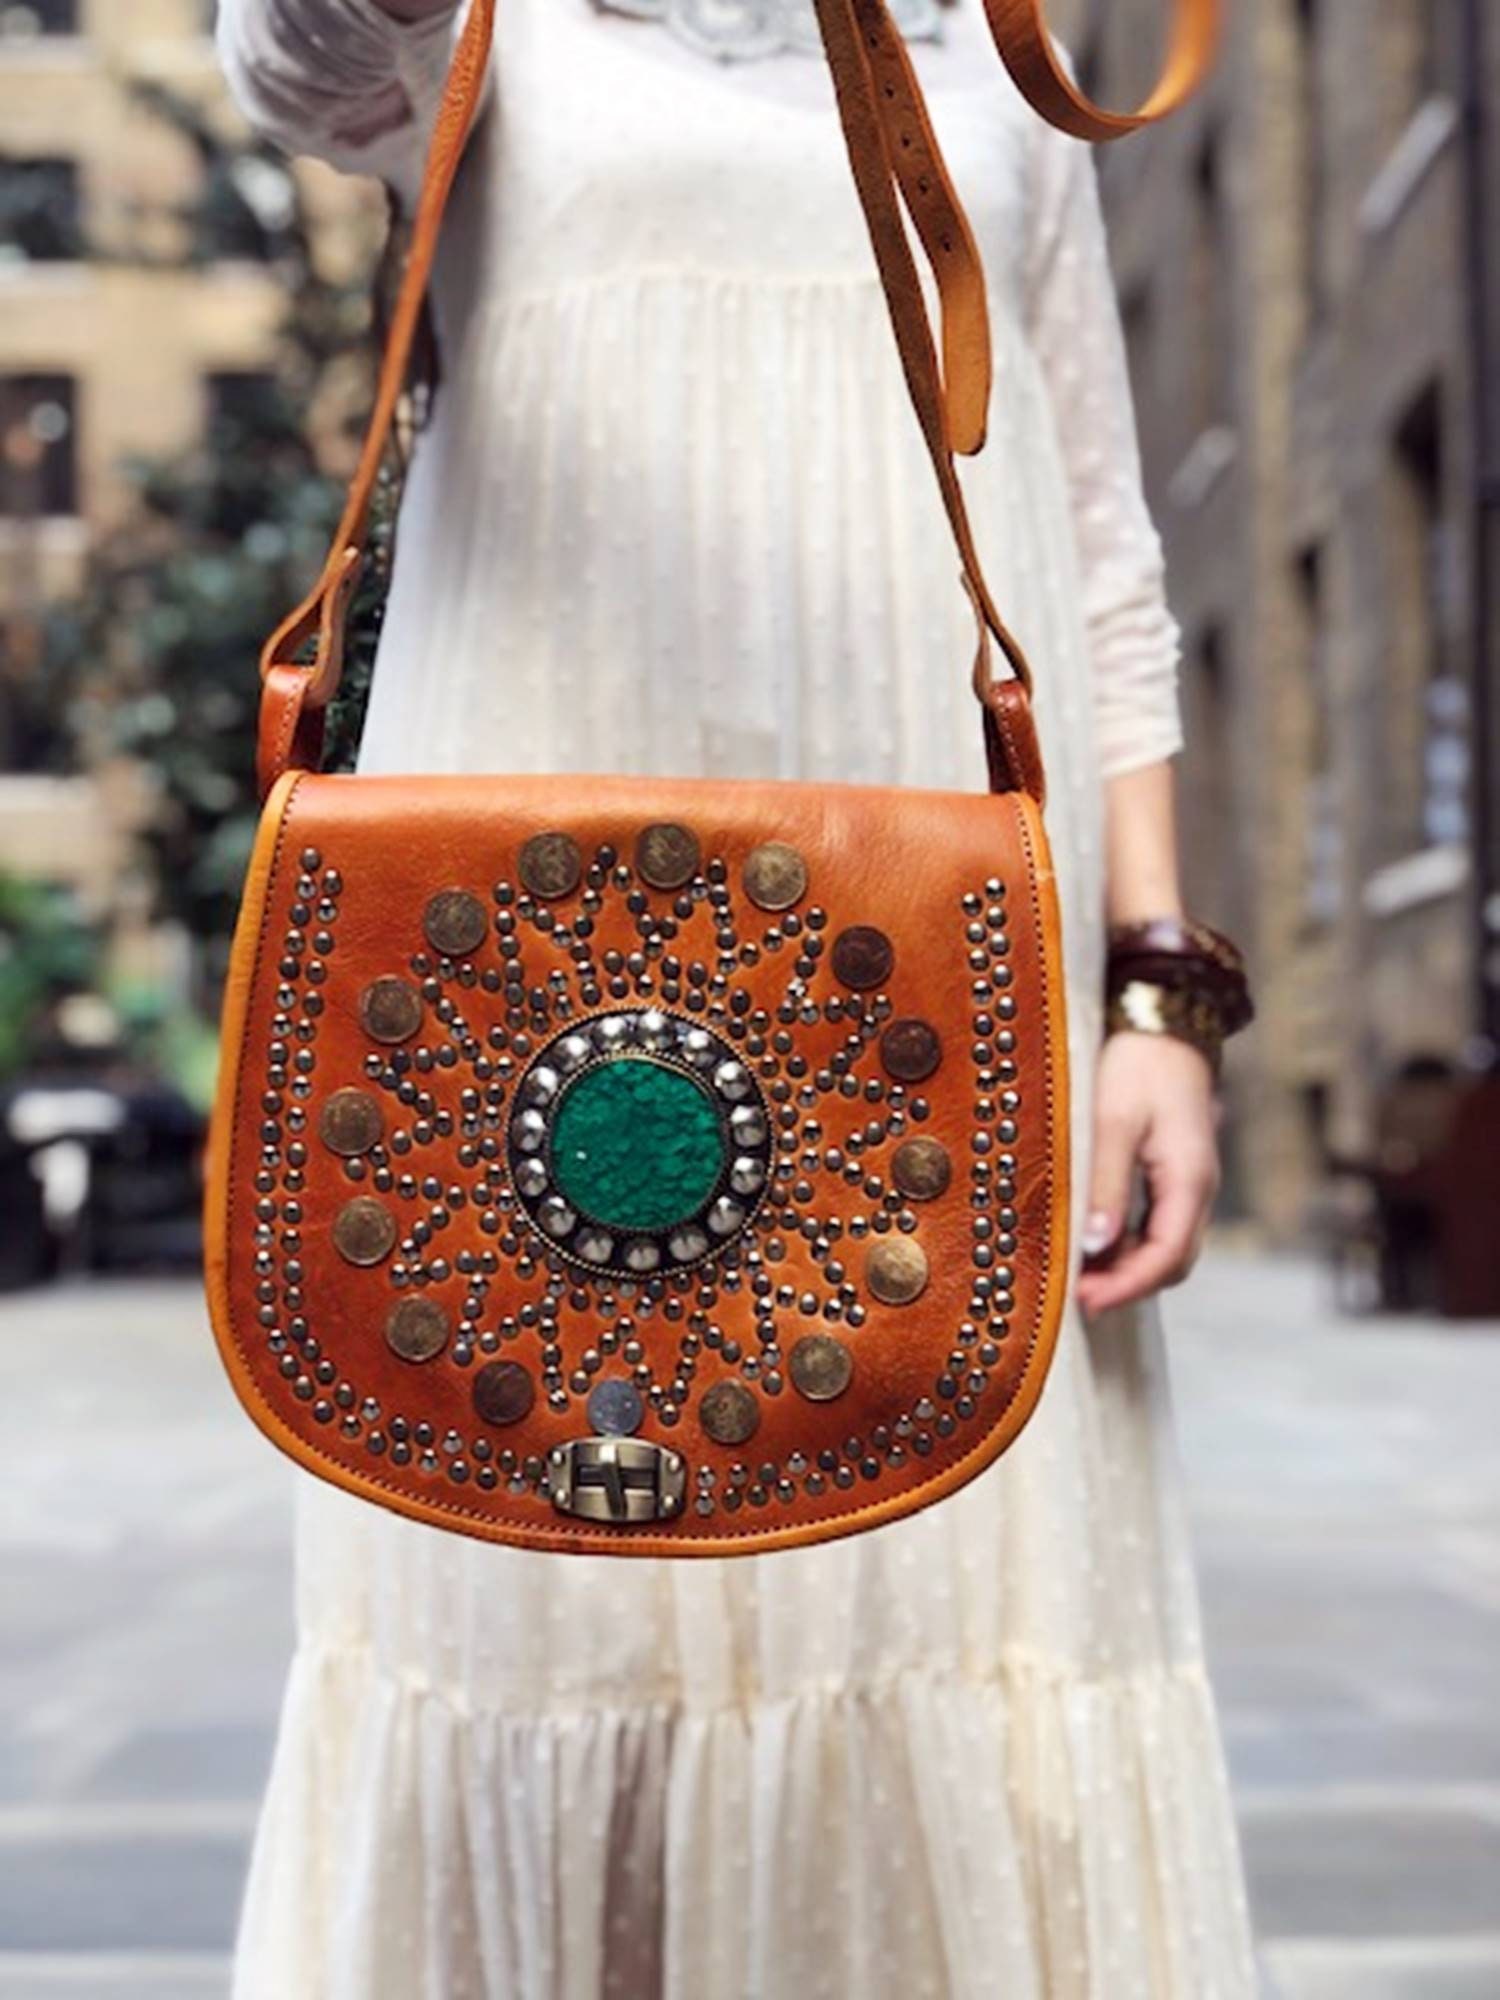 Embossed Leather Handbag - Buy This Boho Purse